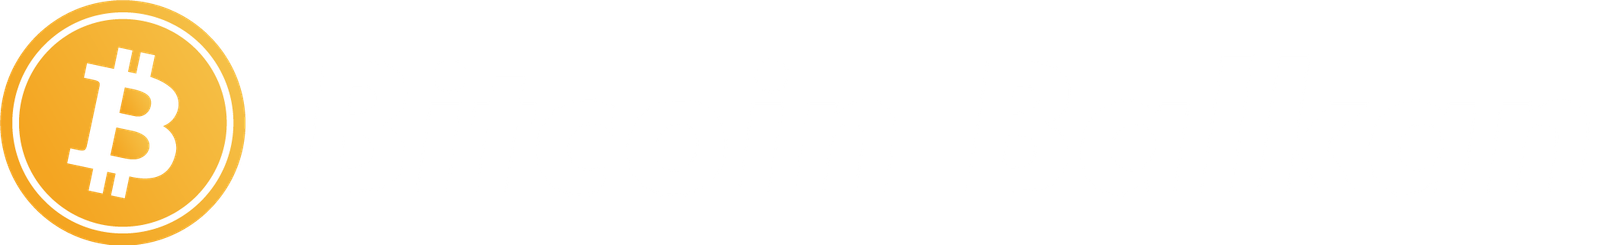 bitcoin-balkan-logo-white